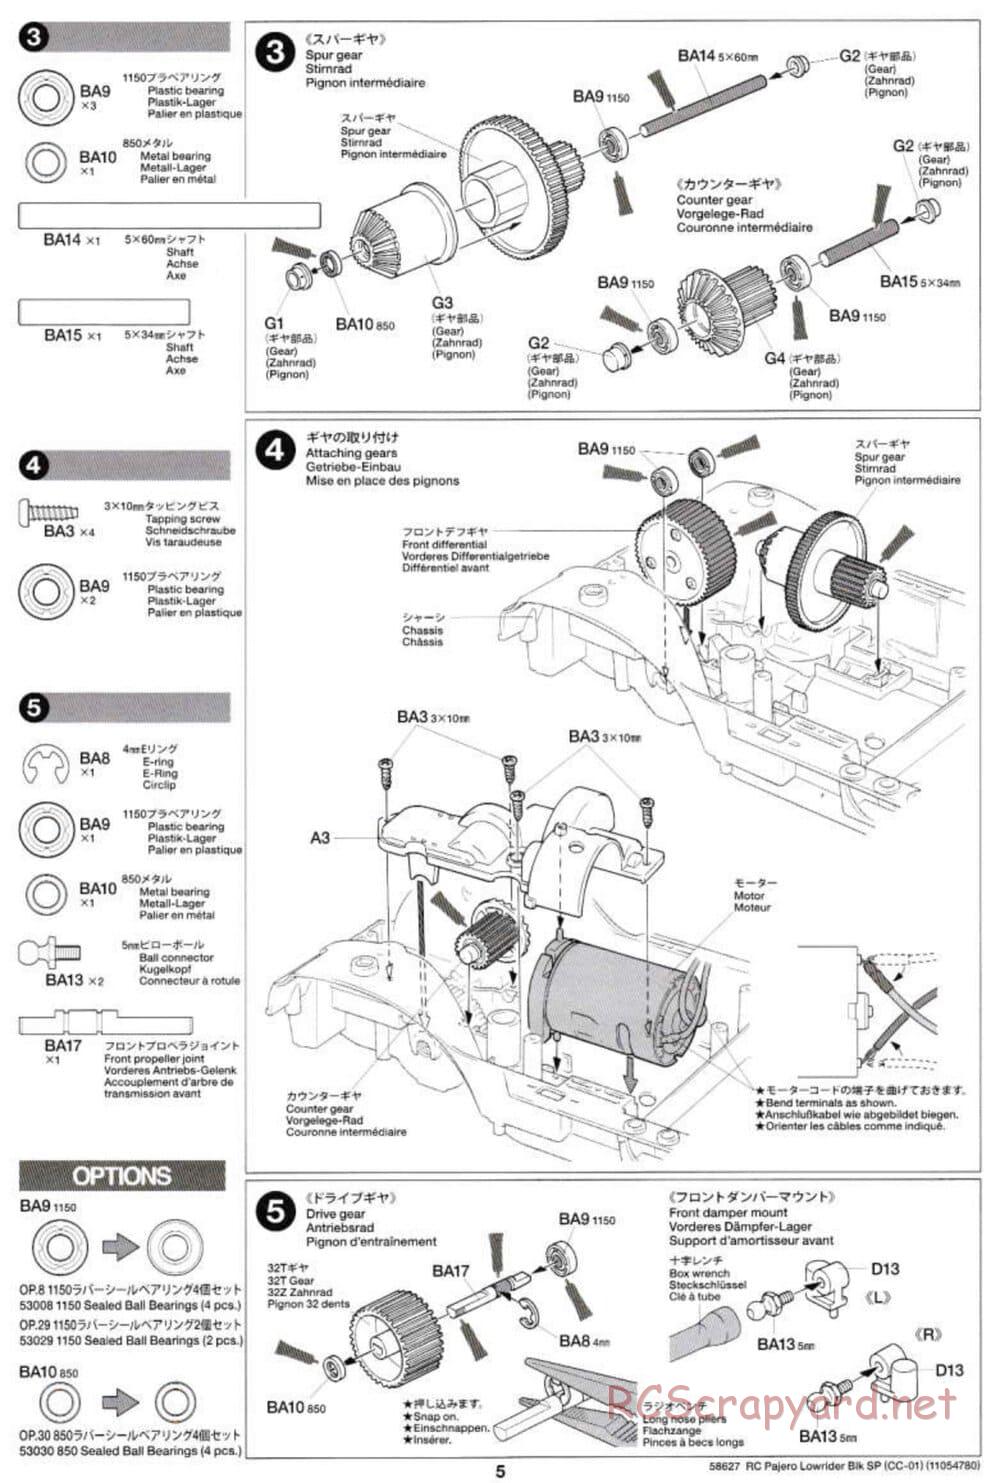 Tamiya - Mitsubishi Pajero Custom Lowrider Black Special - CC-01 Chassis - Manual - Page 5